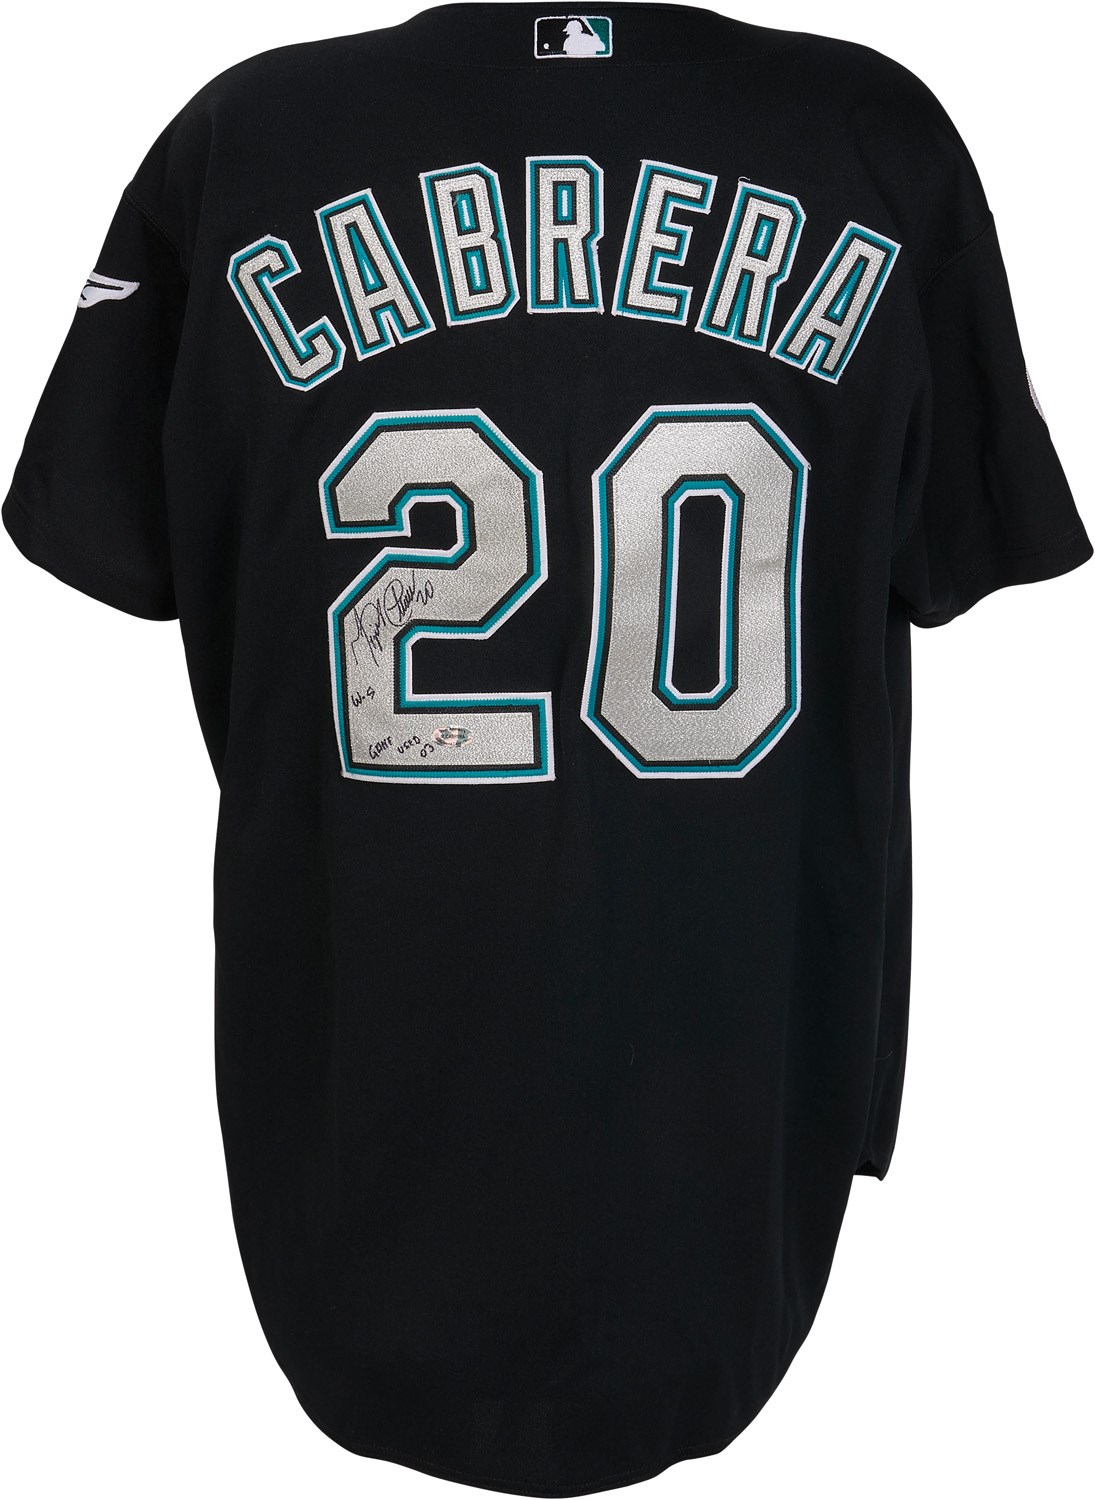 Baseball Equipment - 2003 World Series Miguel Cabrera Signed Game Worn Marlins Jersey (PSA)